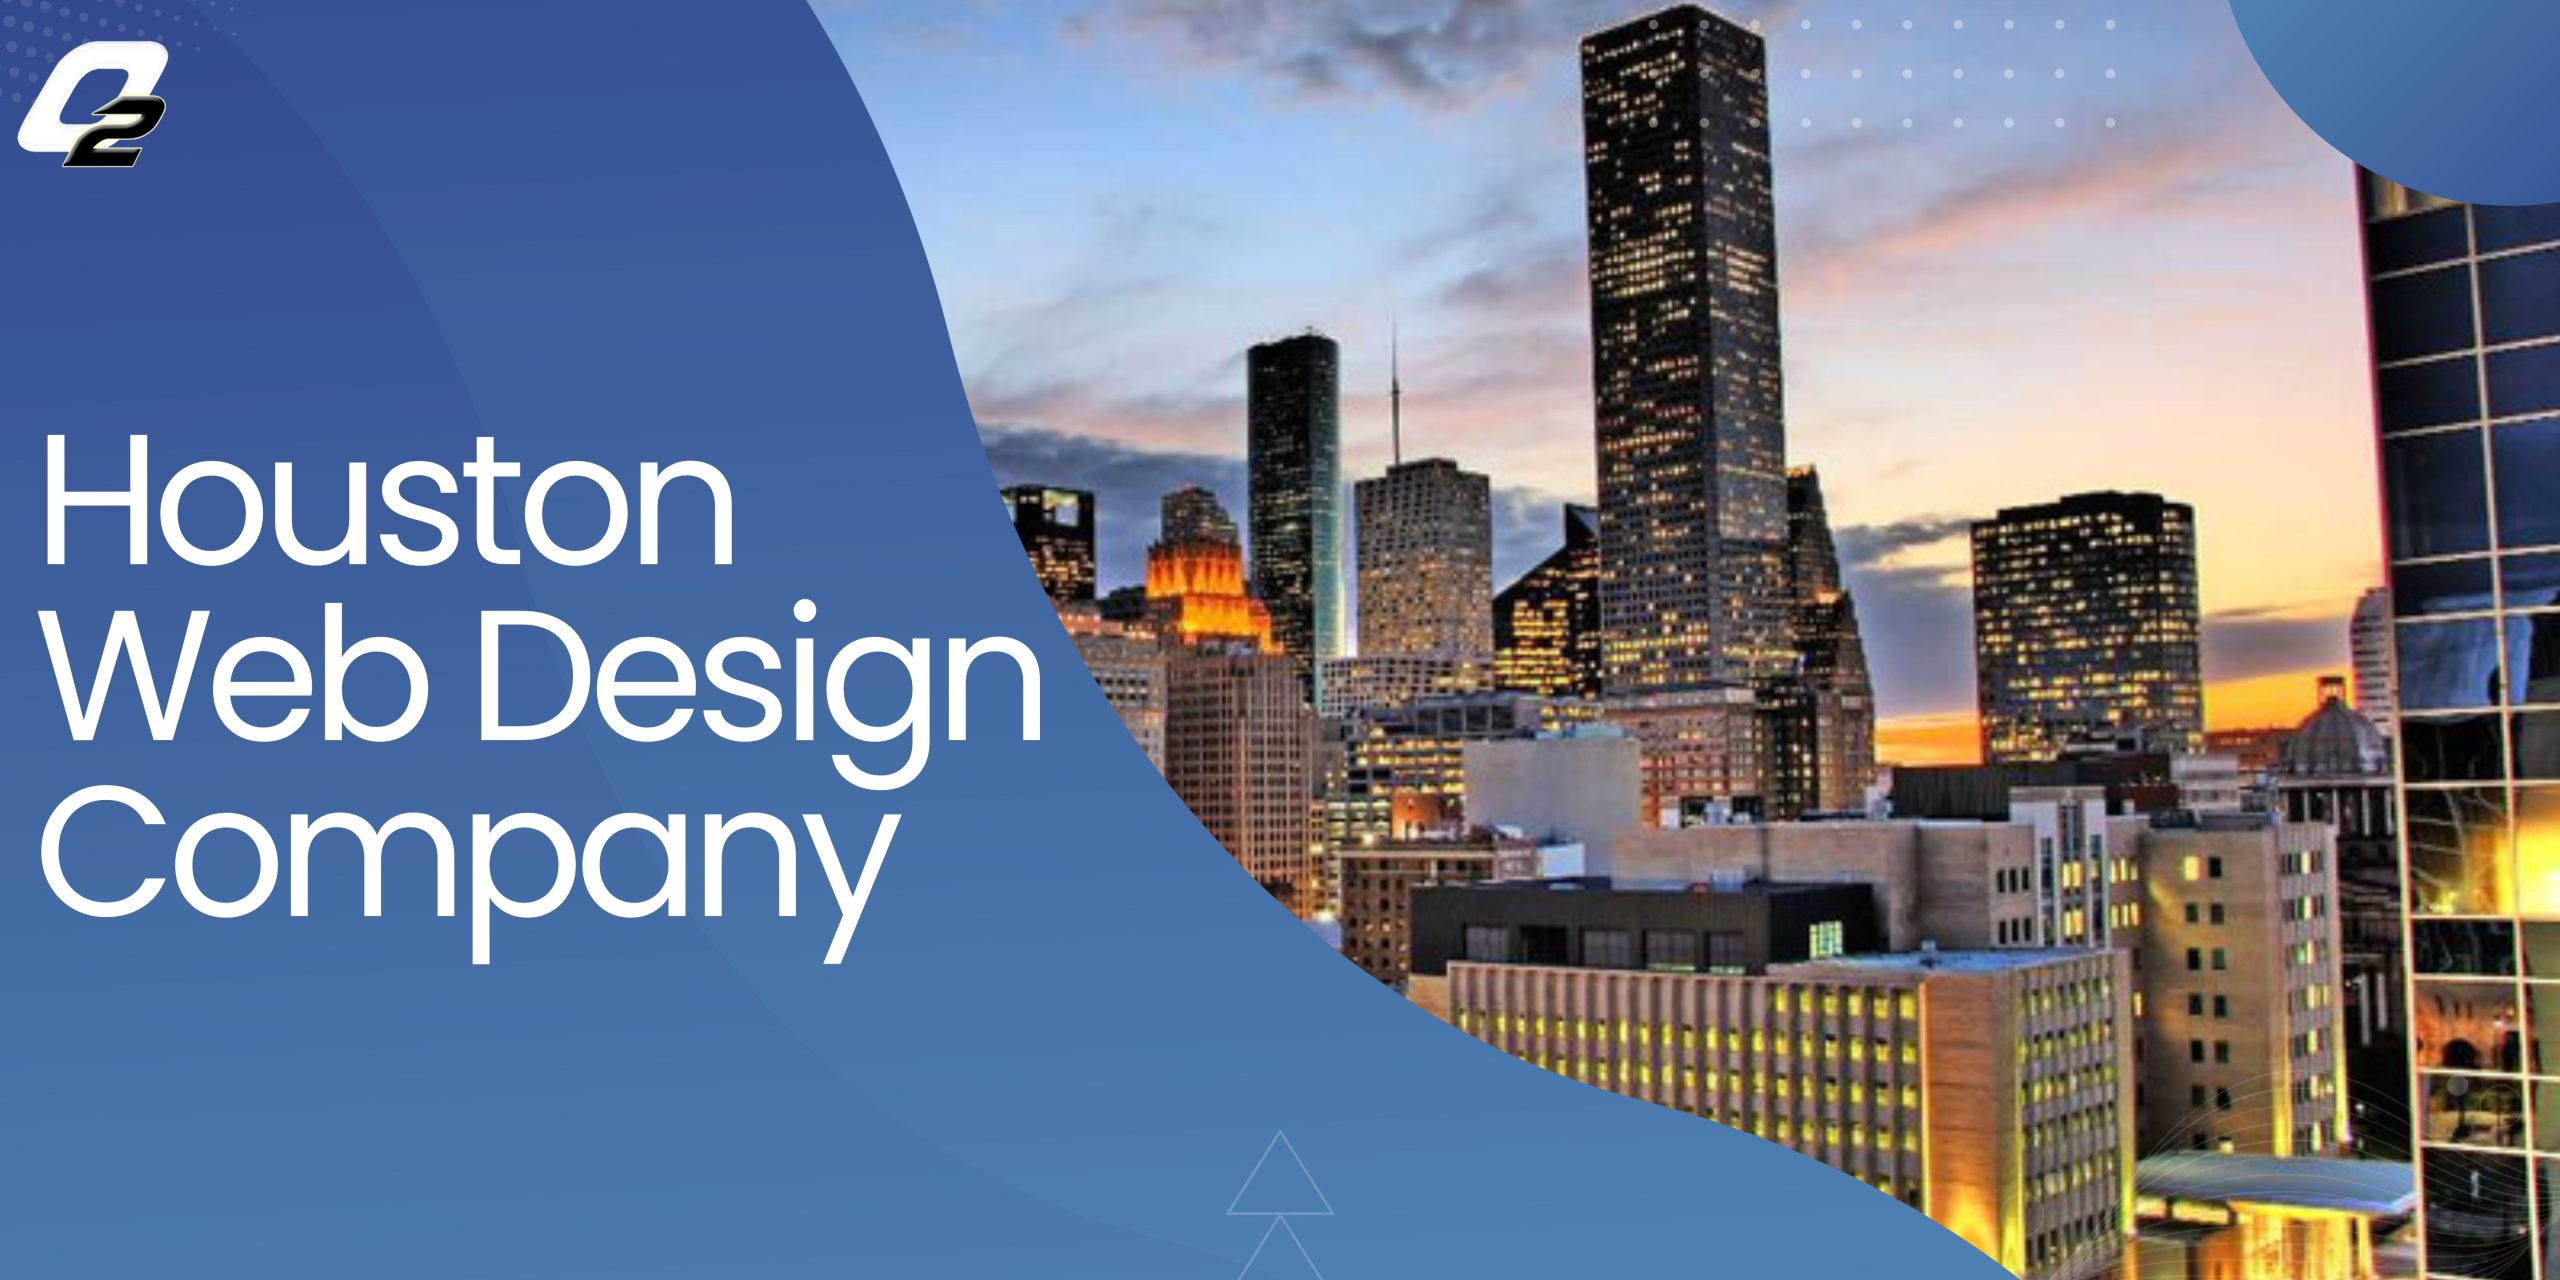 Houston Web Design Company